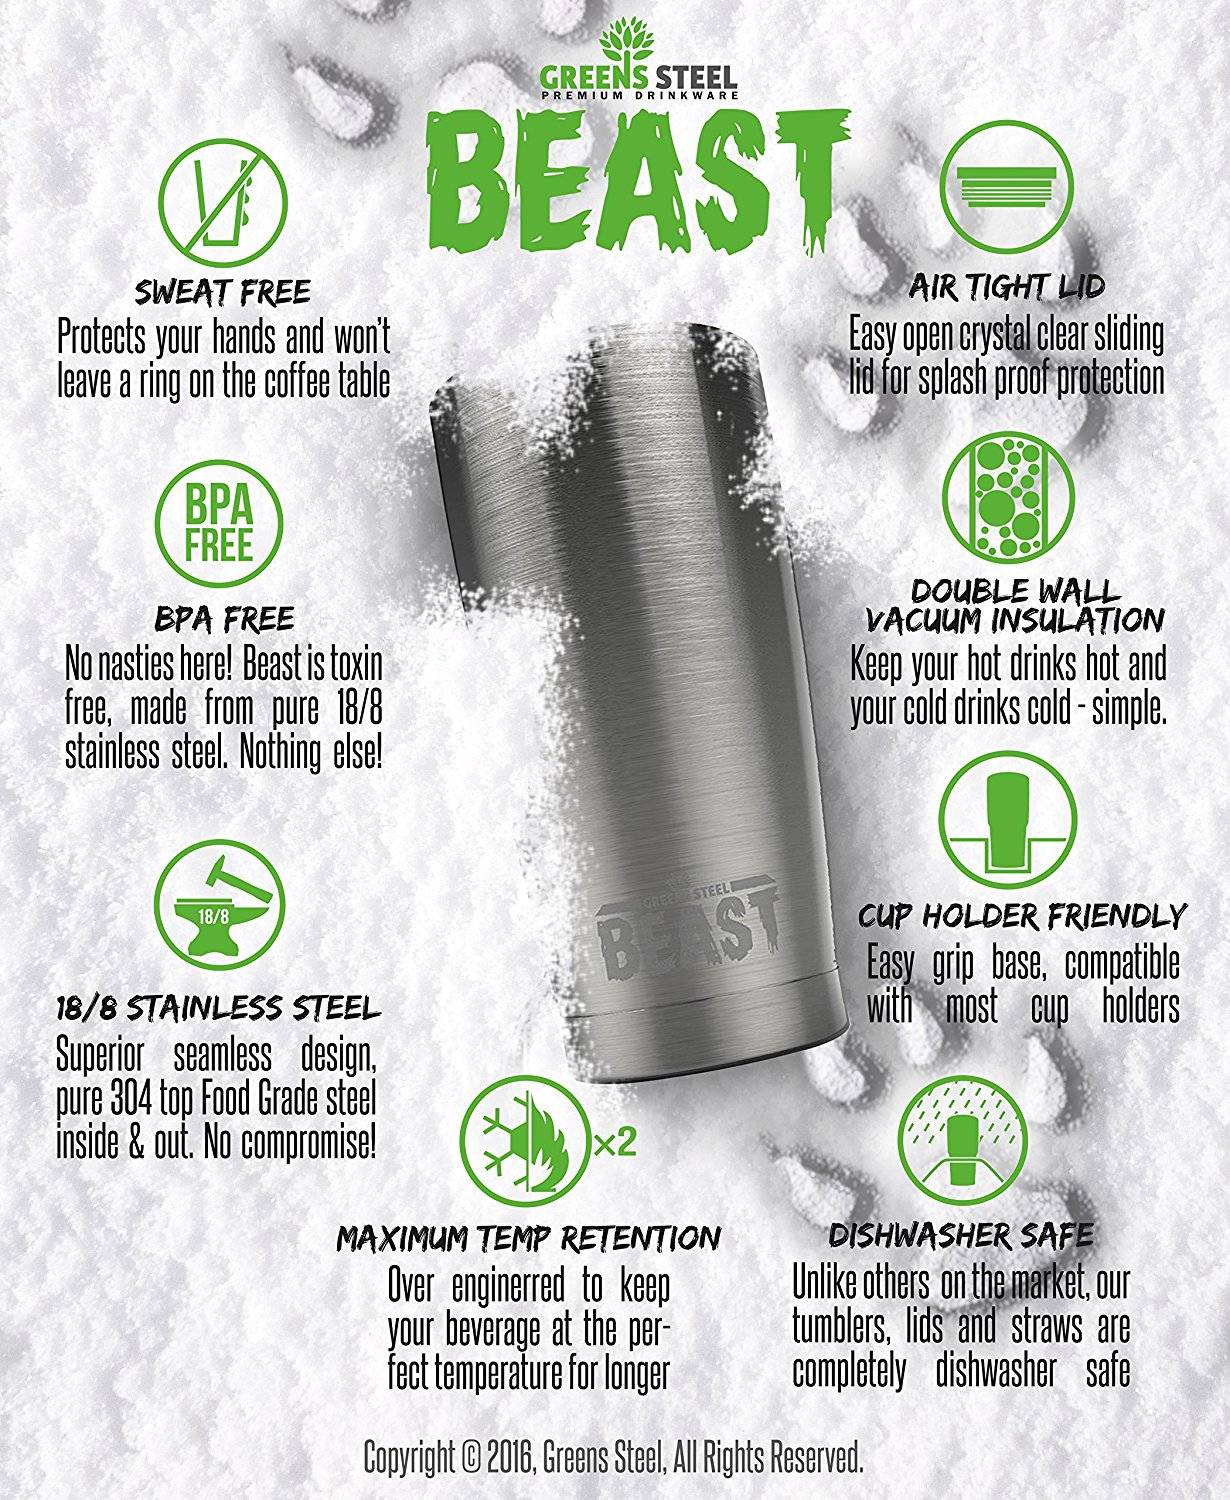 Greens Steel Beast tumbler